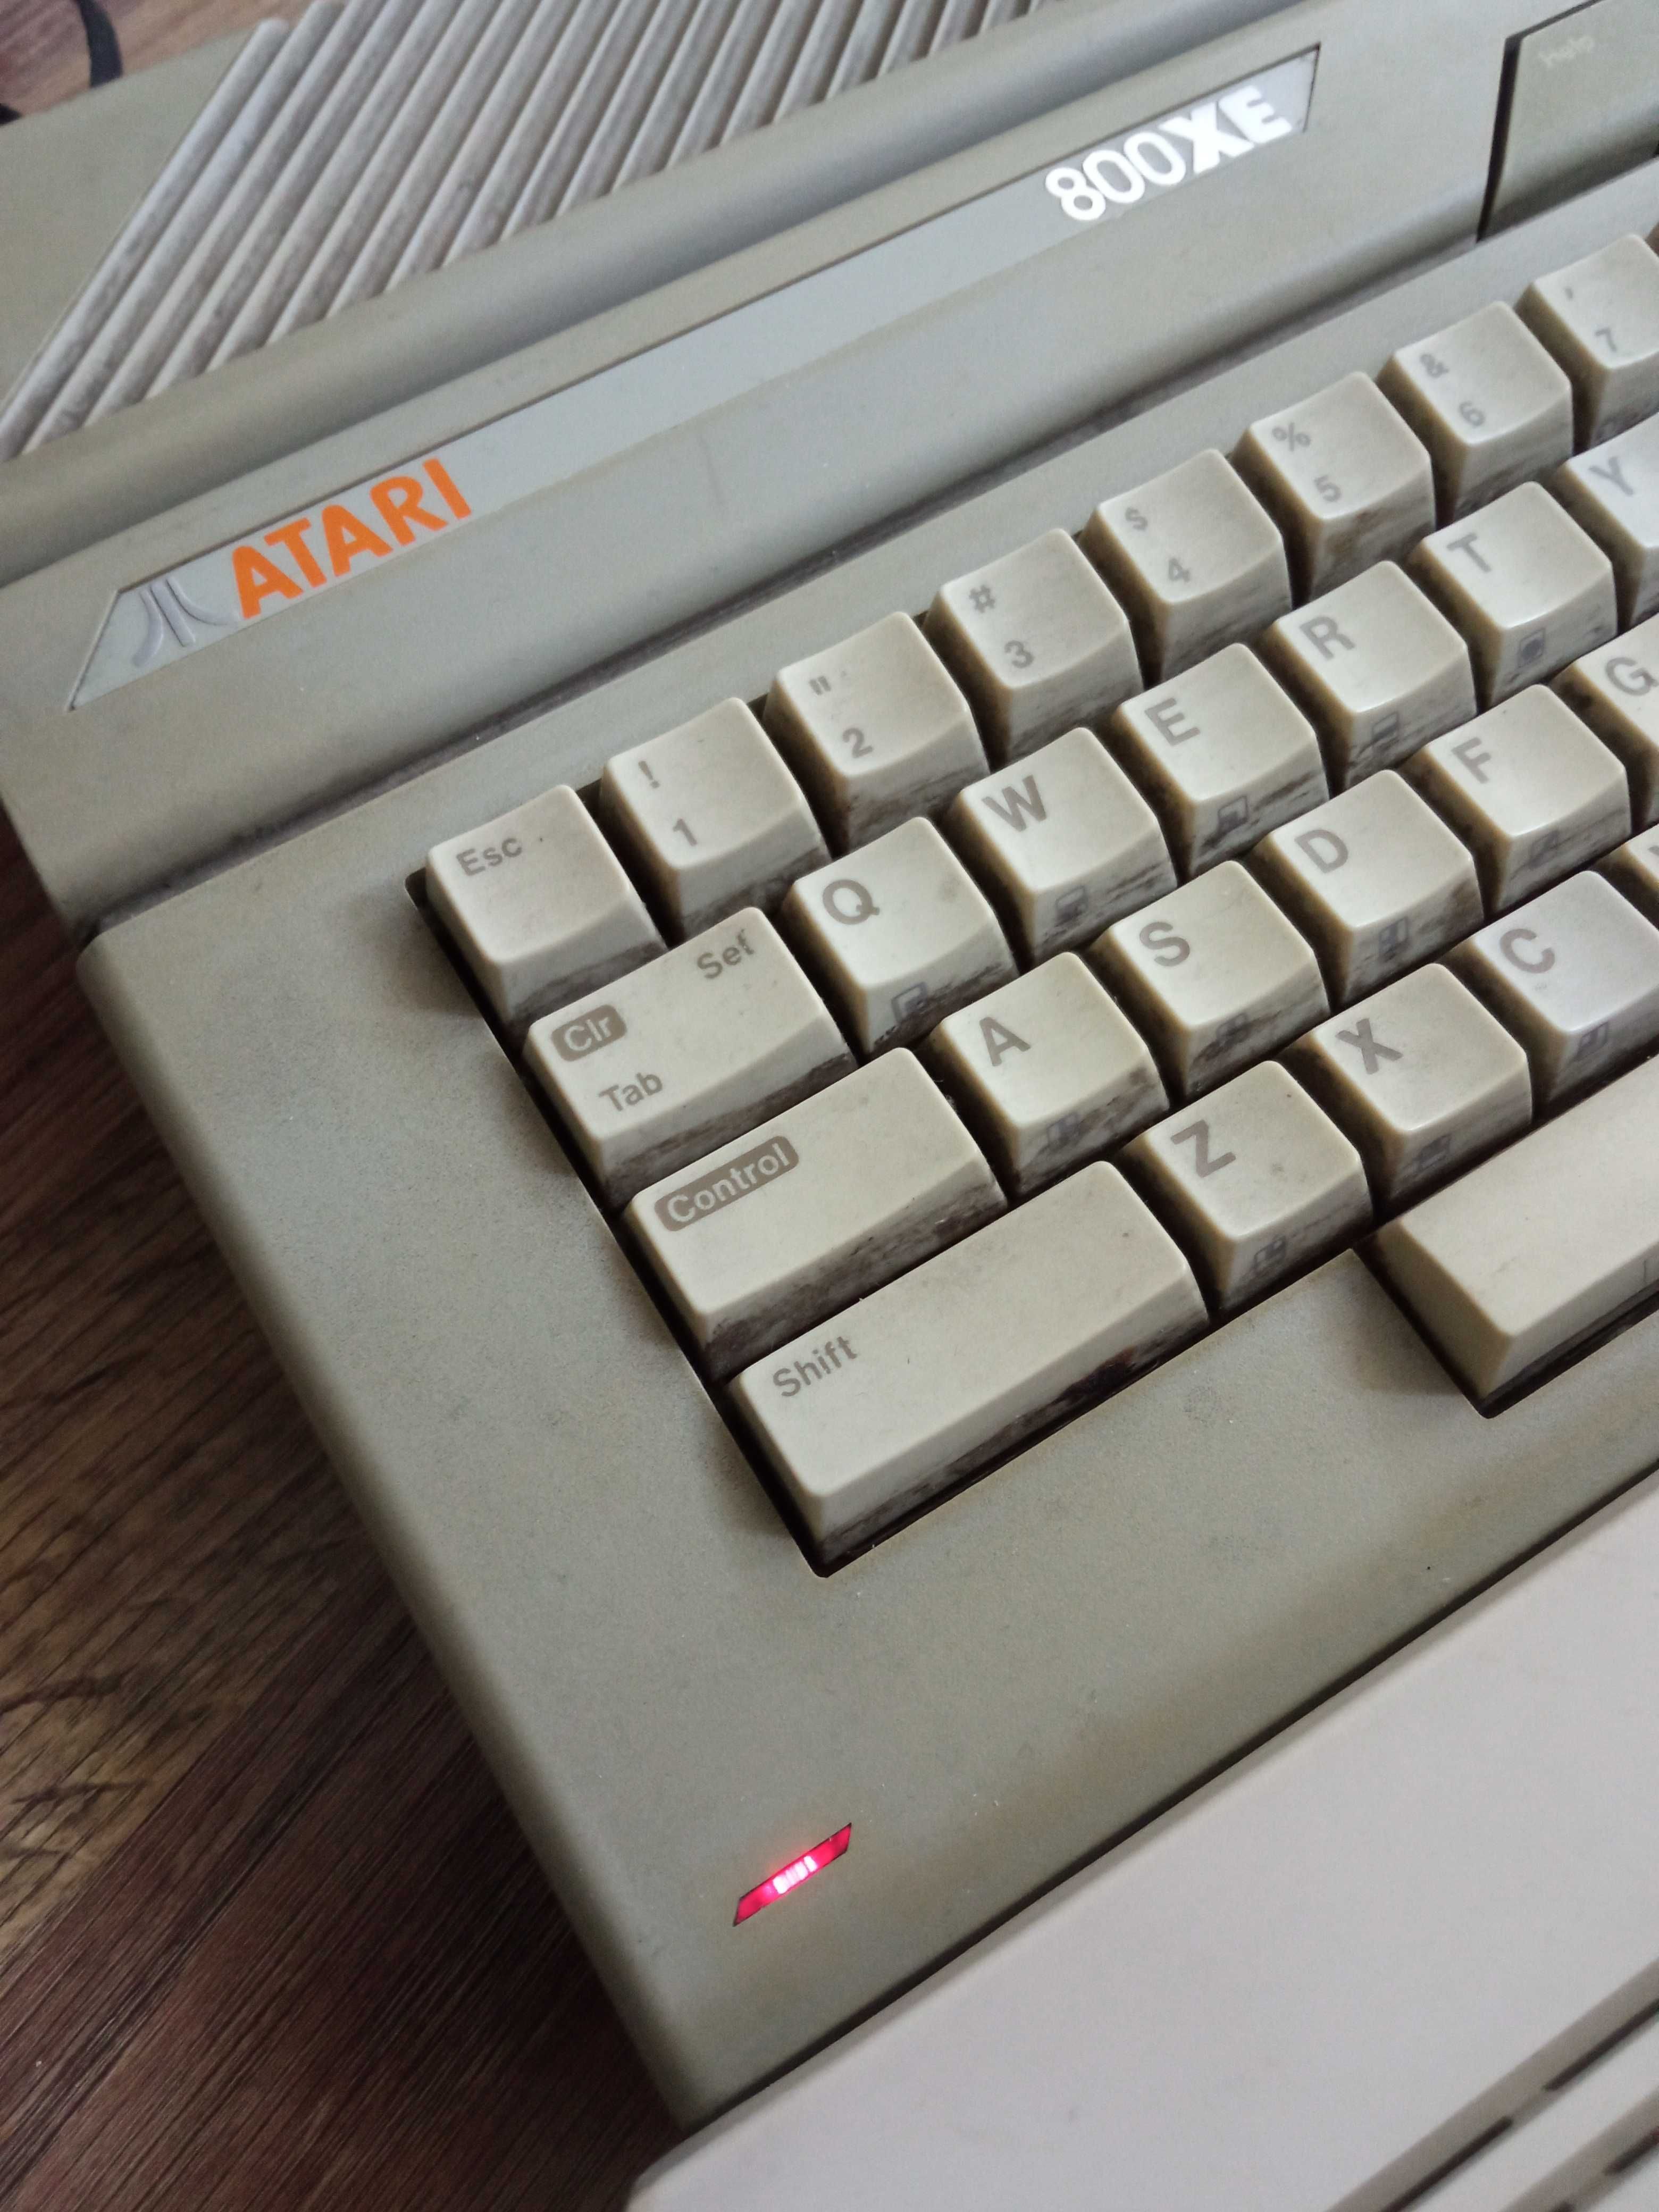 Sprzęt komputerowy Atari 800XE Commodore 64 II